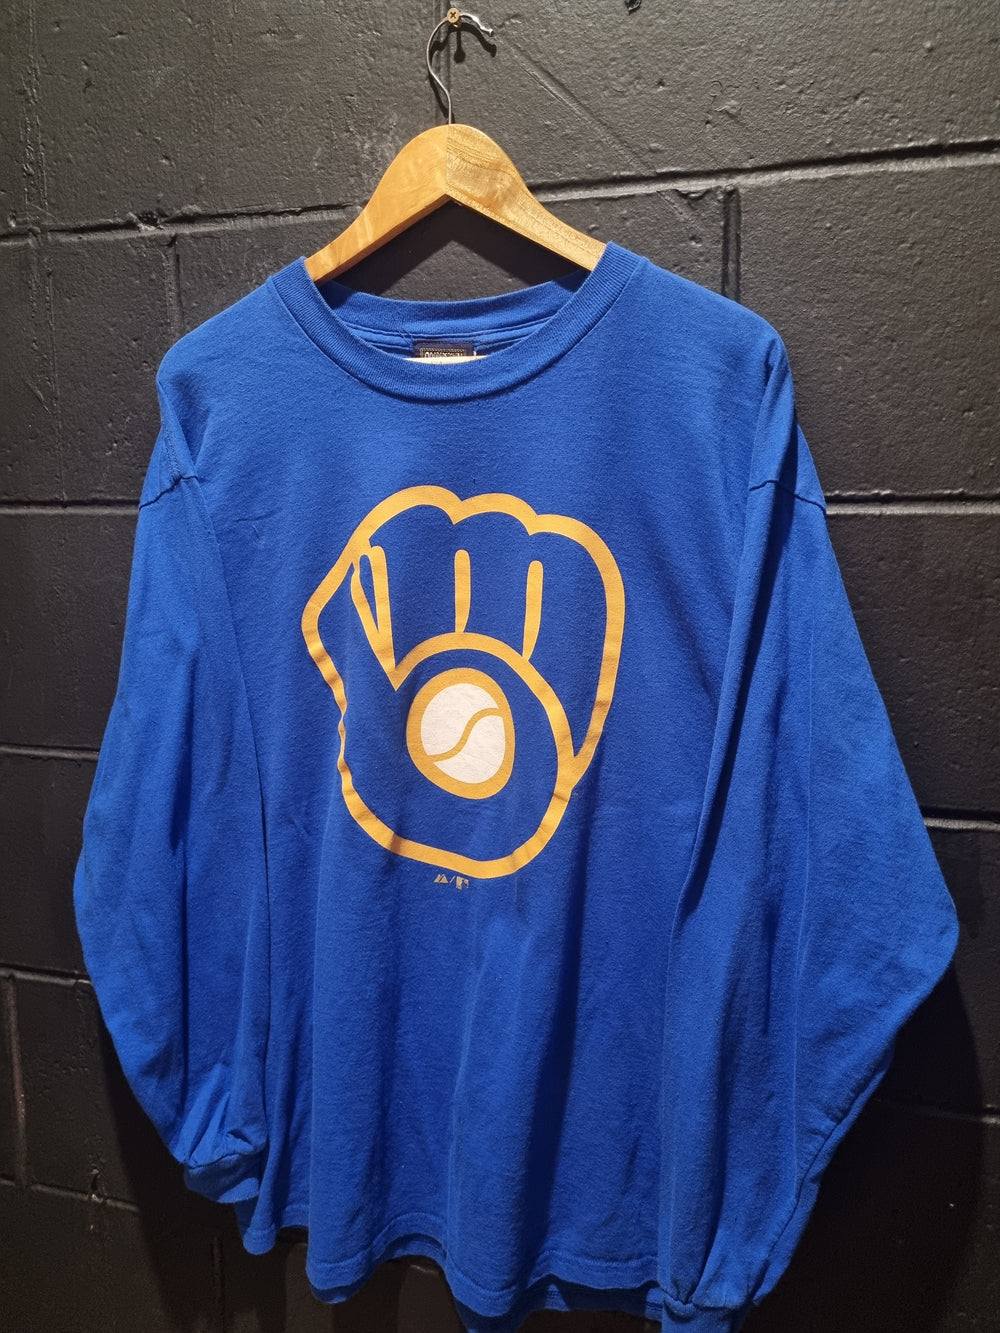 Milwaukee Brewers Cooperstown Collection Sweatshirt XL